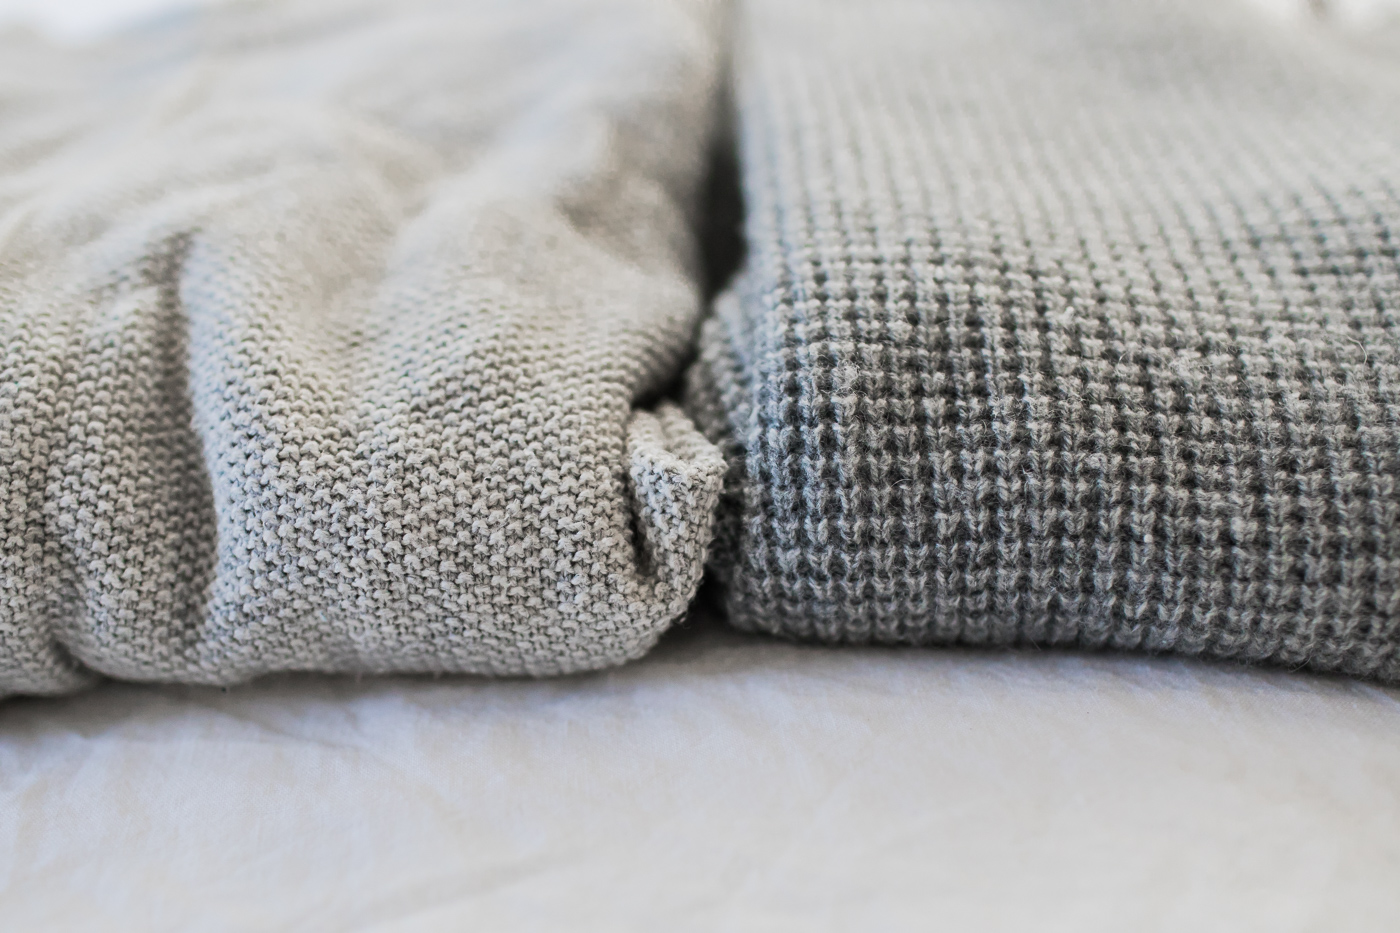 Feel Good Winter Wardrobe Swaps - Eco-friendly, socially conscious wardrobe duplicates for winter staples.